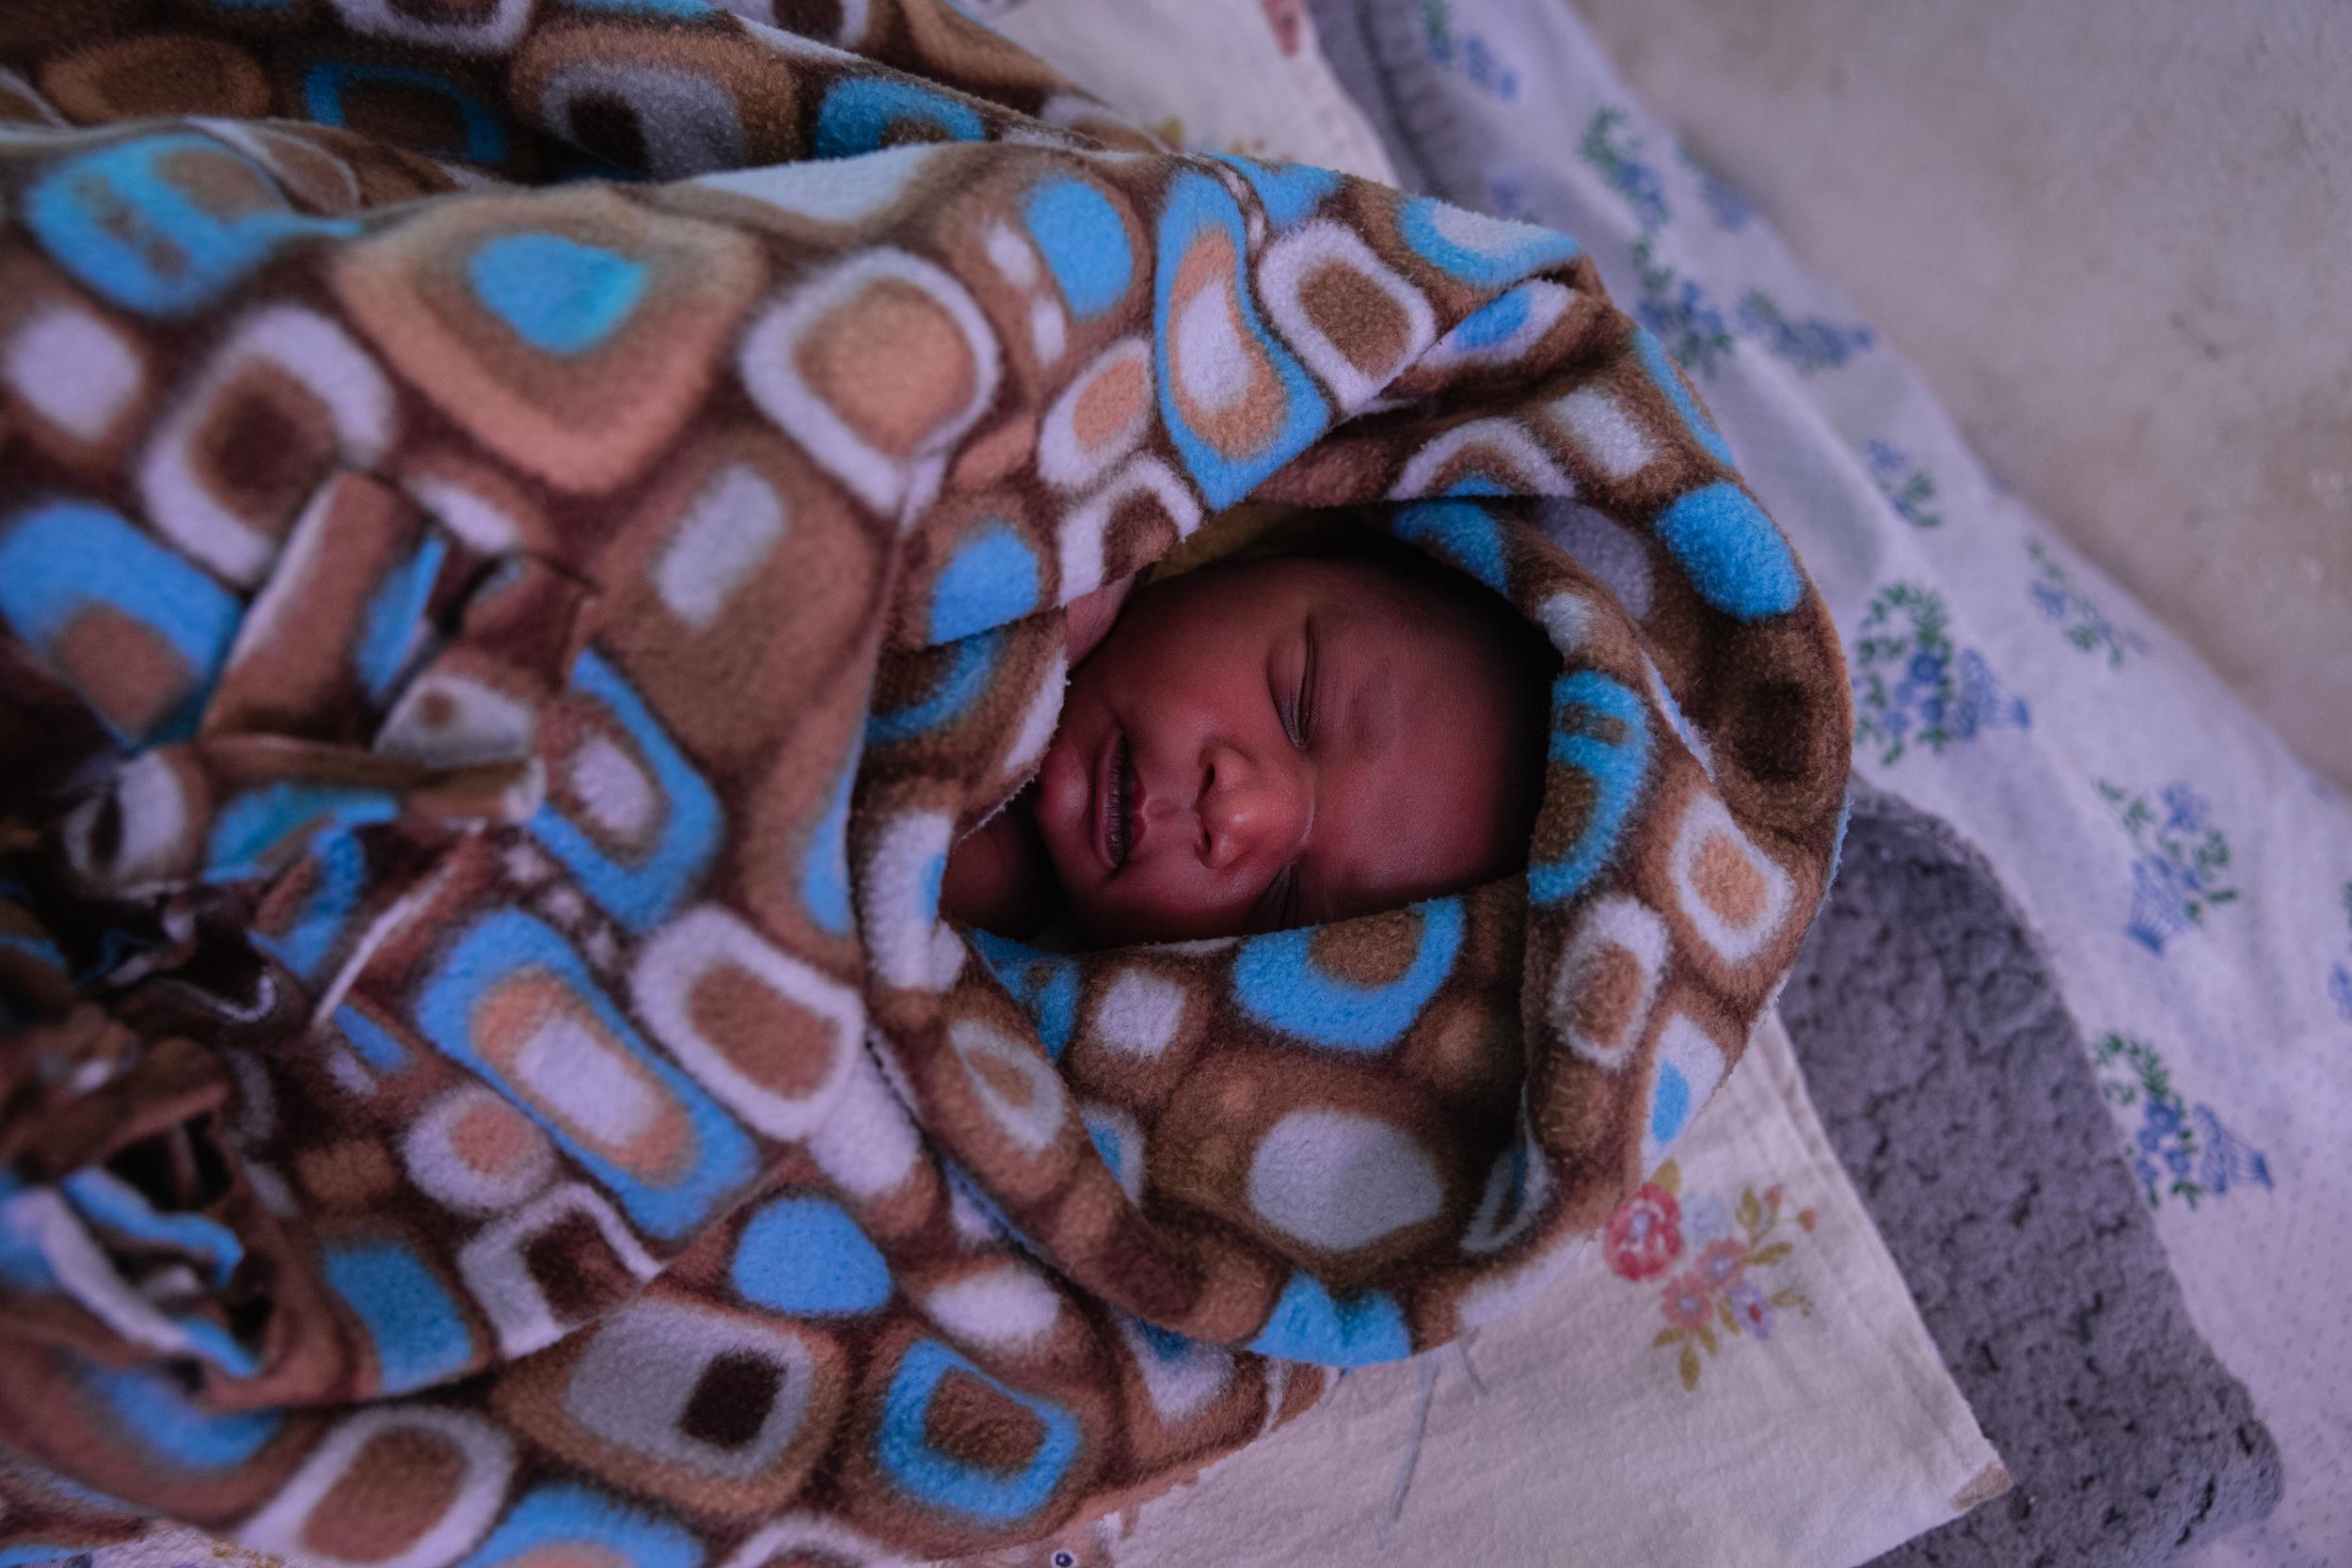 A new born baby in Uganda, Africa